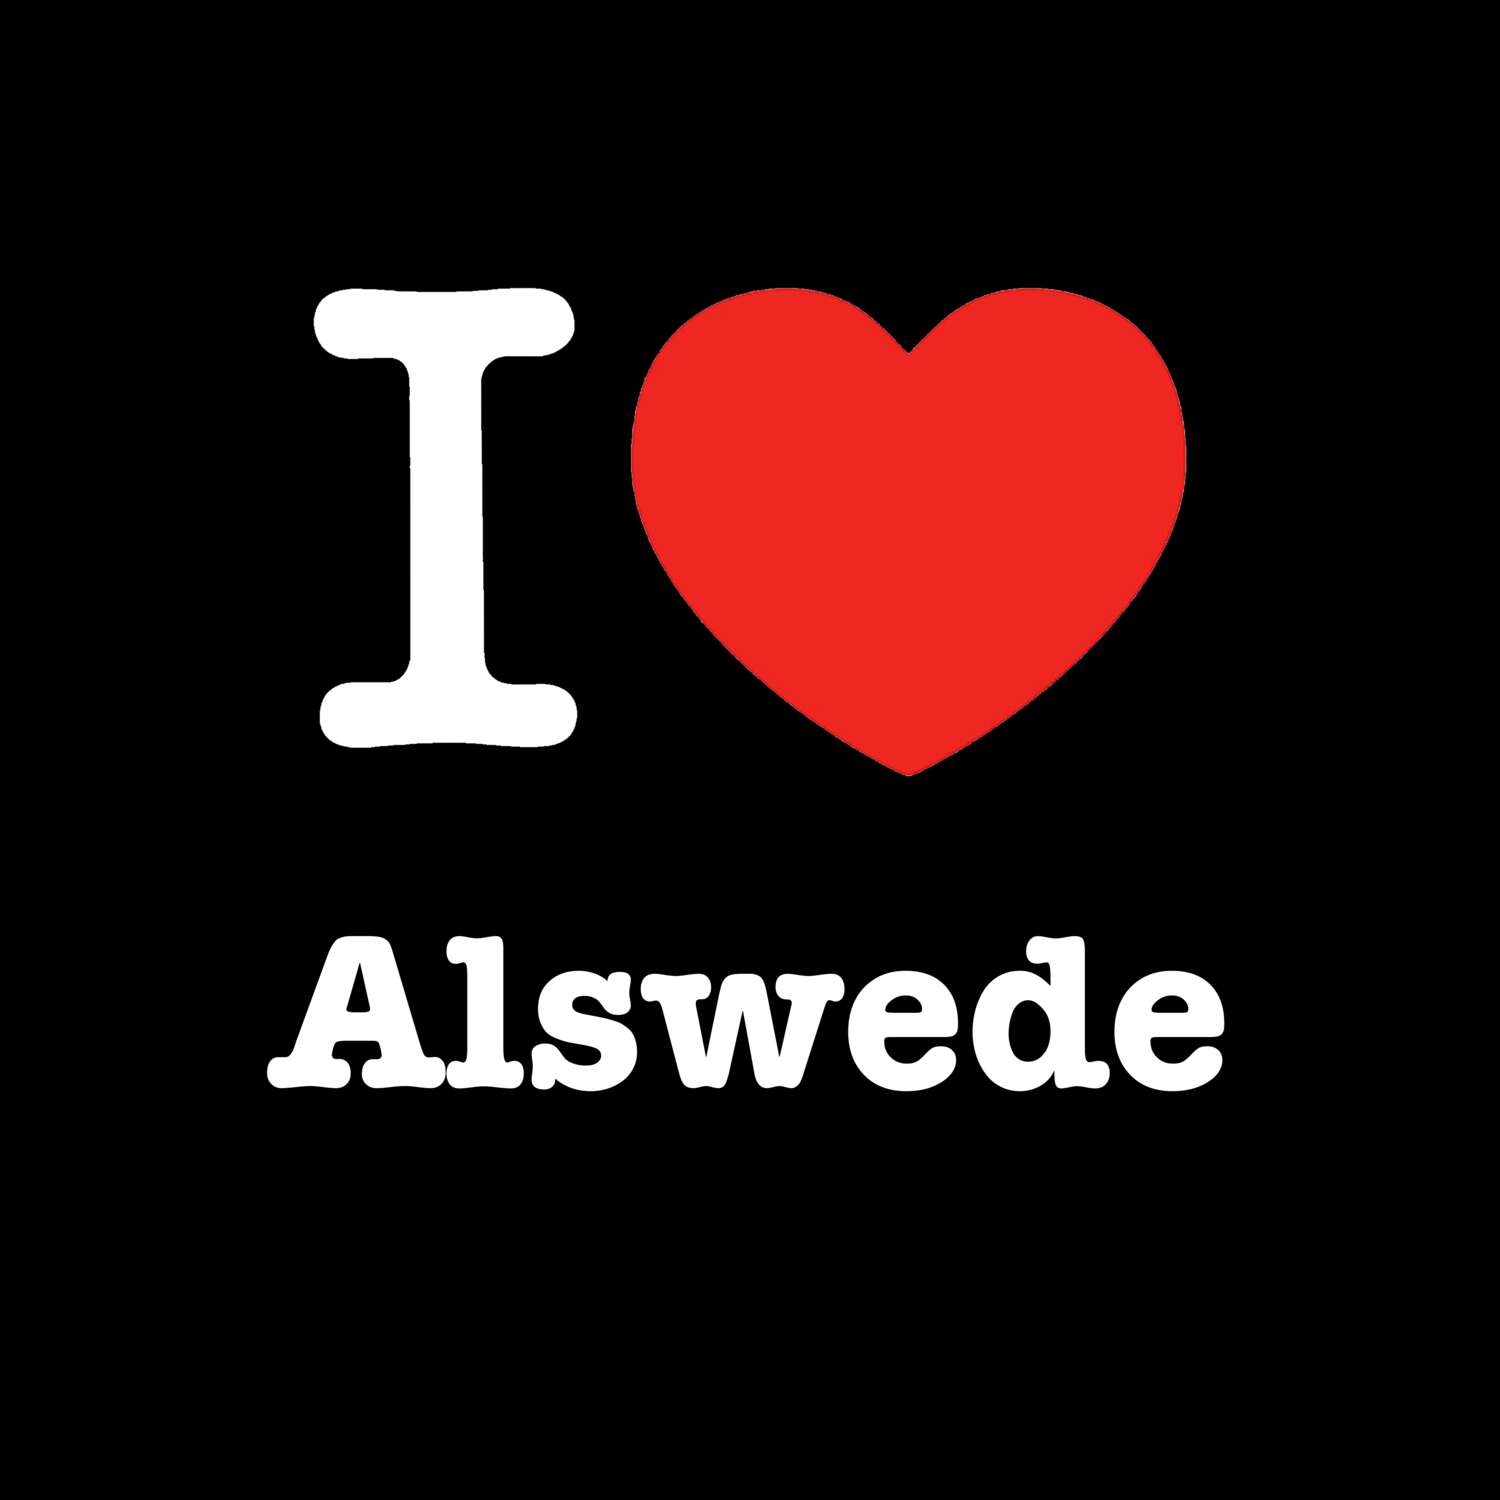 Alswede T-Shirt »I love«